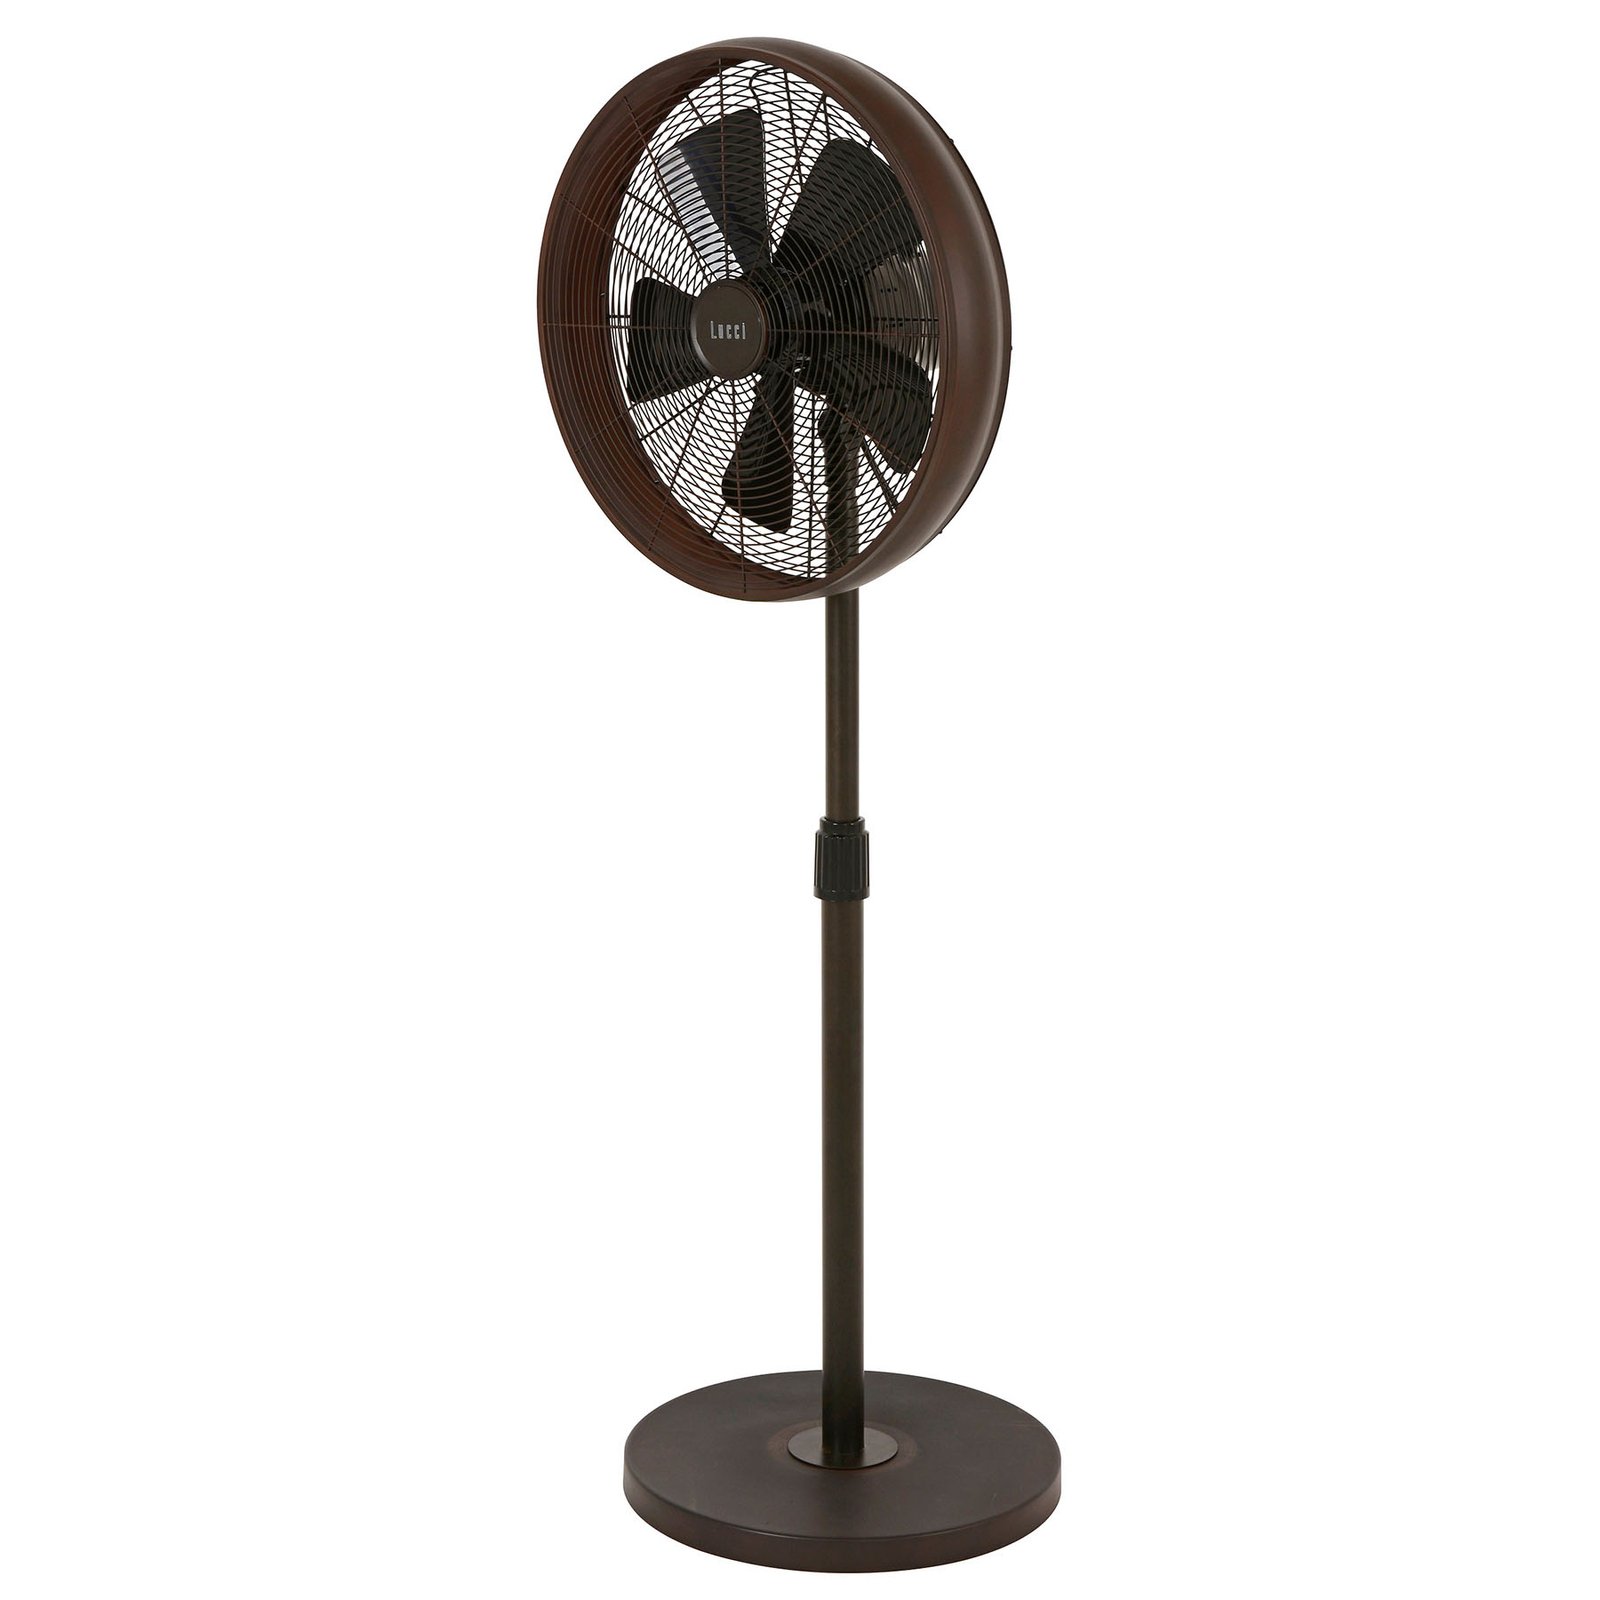 Breeze pedestal fan 122 cm, round base, bronze